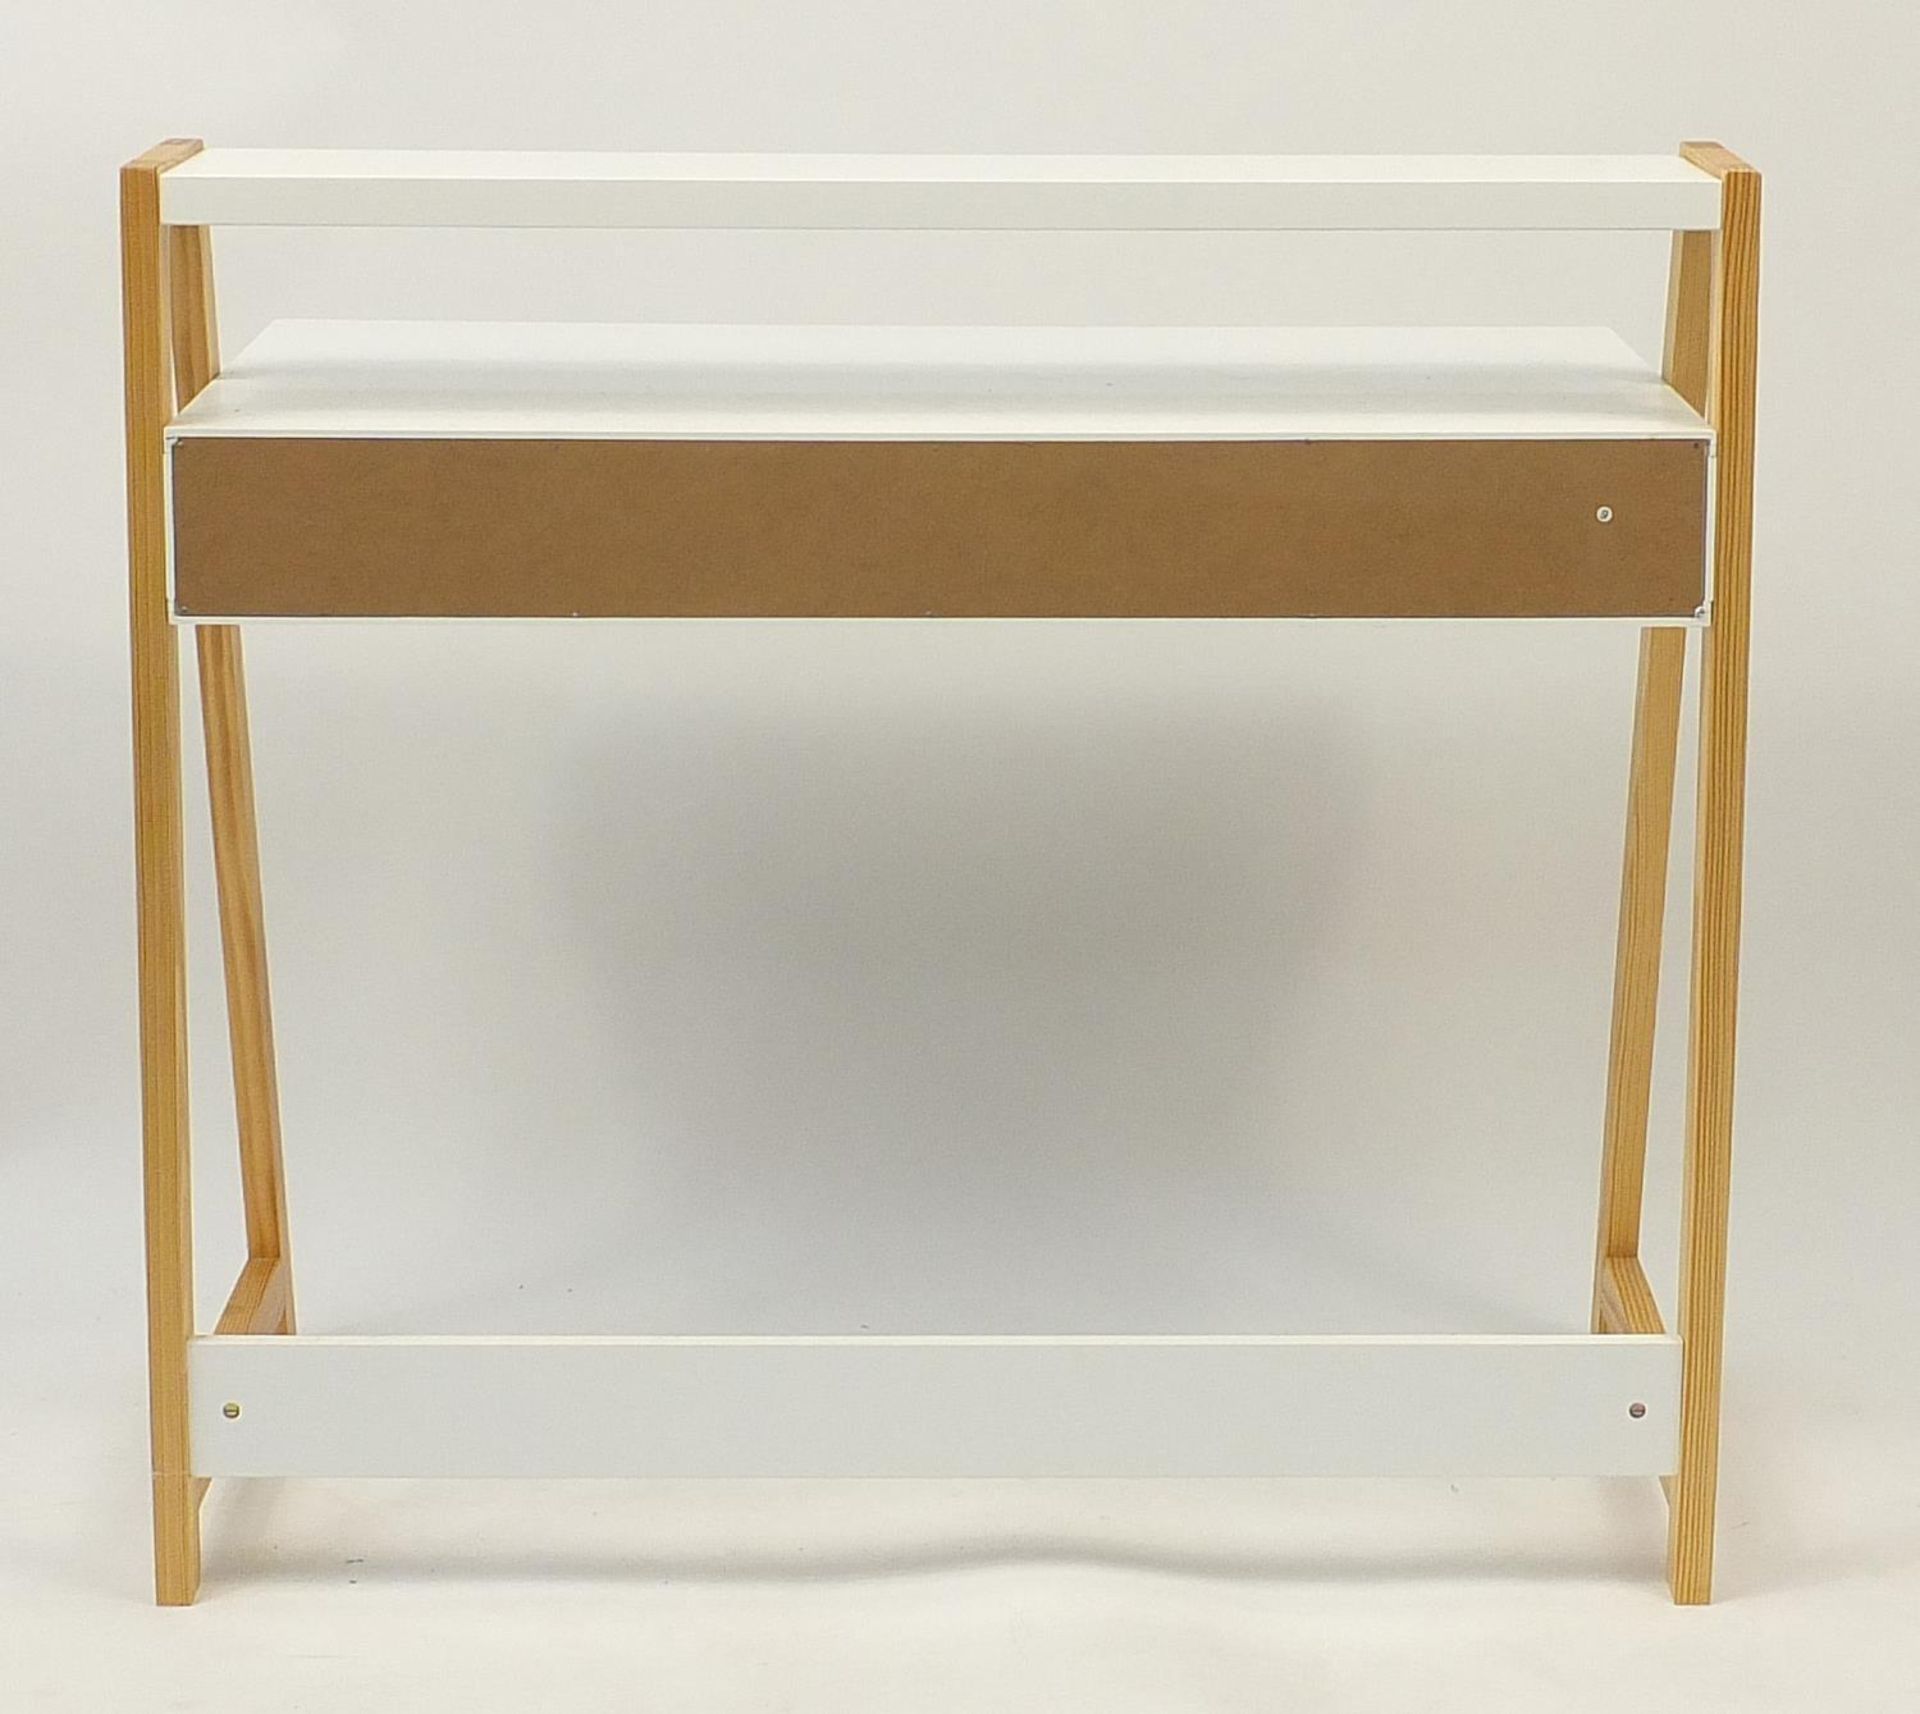 Contemporary light wood and melamine desk, 92.5cm H x 100cm W x 52cm D - Image 4 of 4